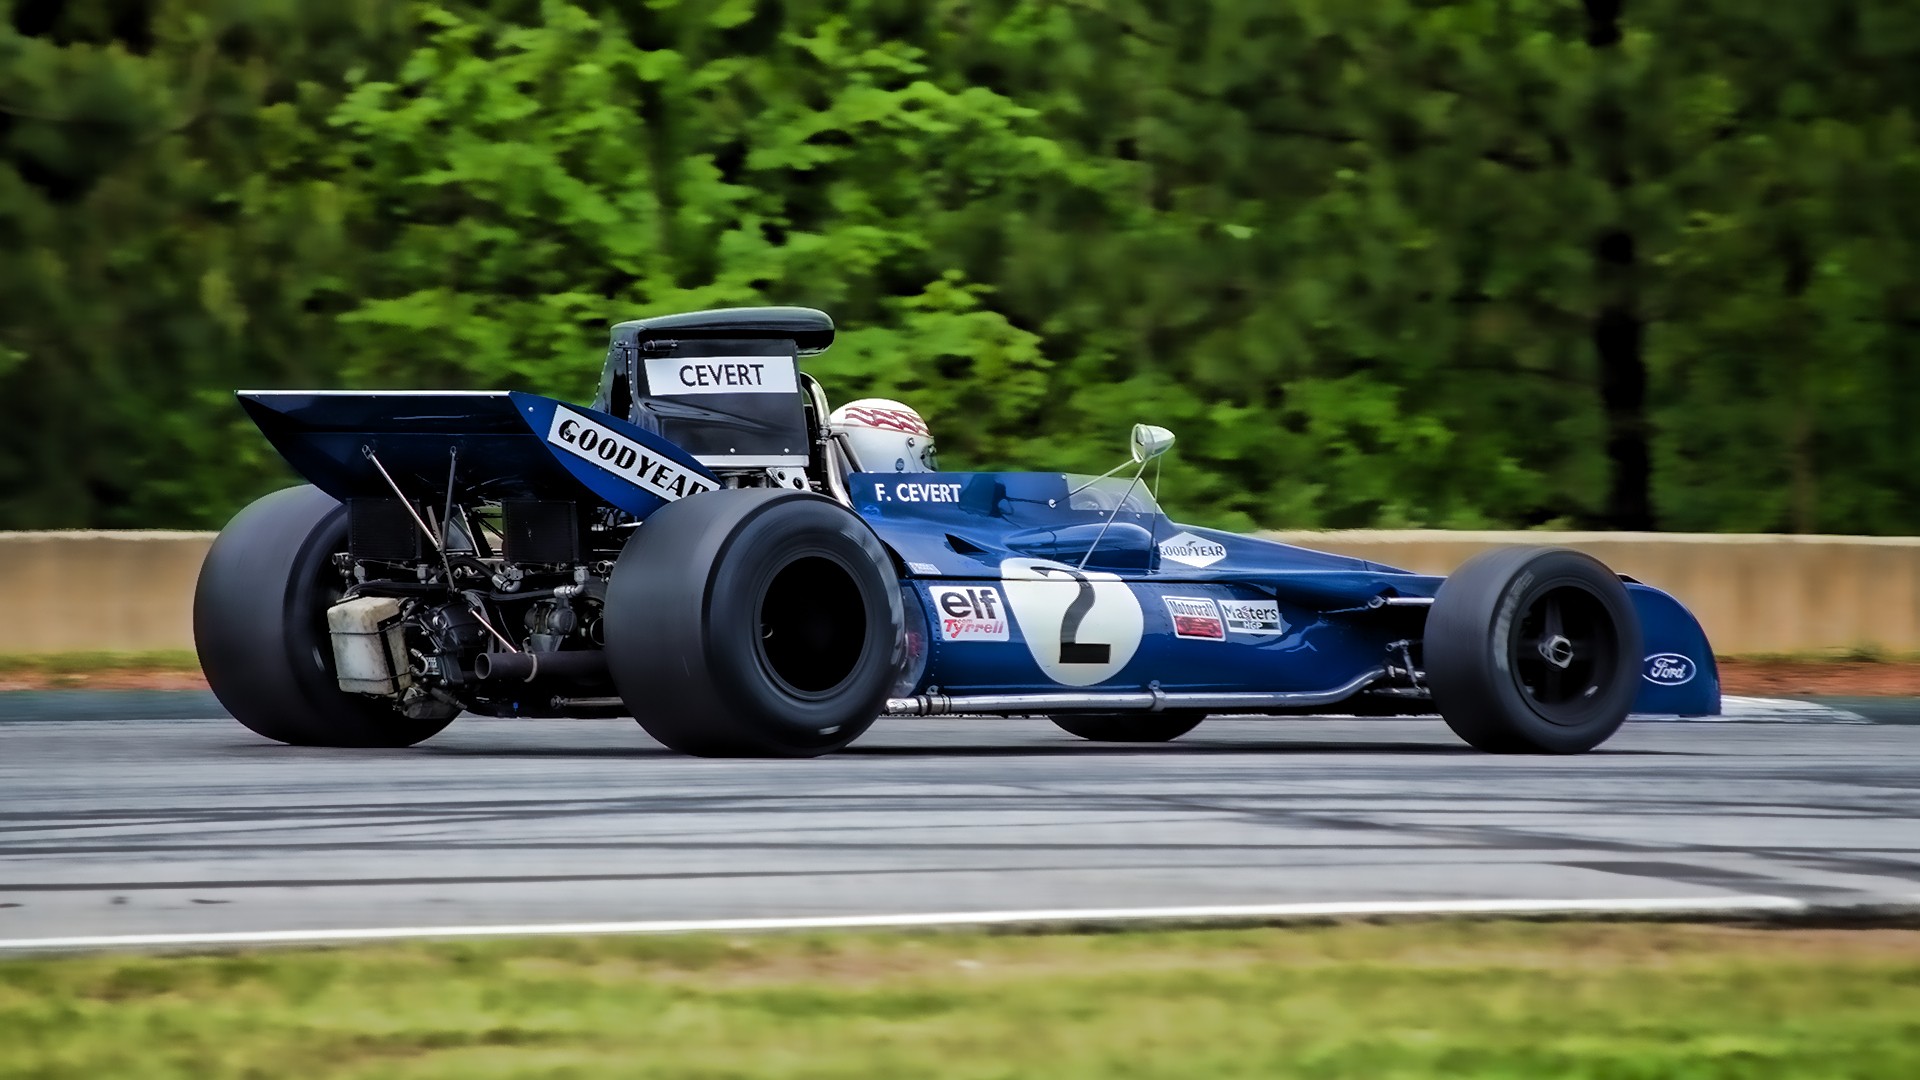 General 1920x1080 Formula 1 vintage race cars car vehicle motorsport racing sport blue cars